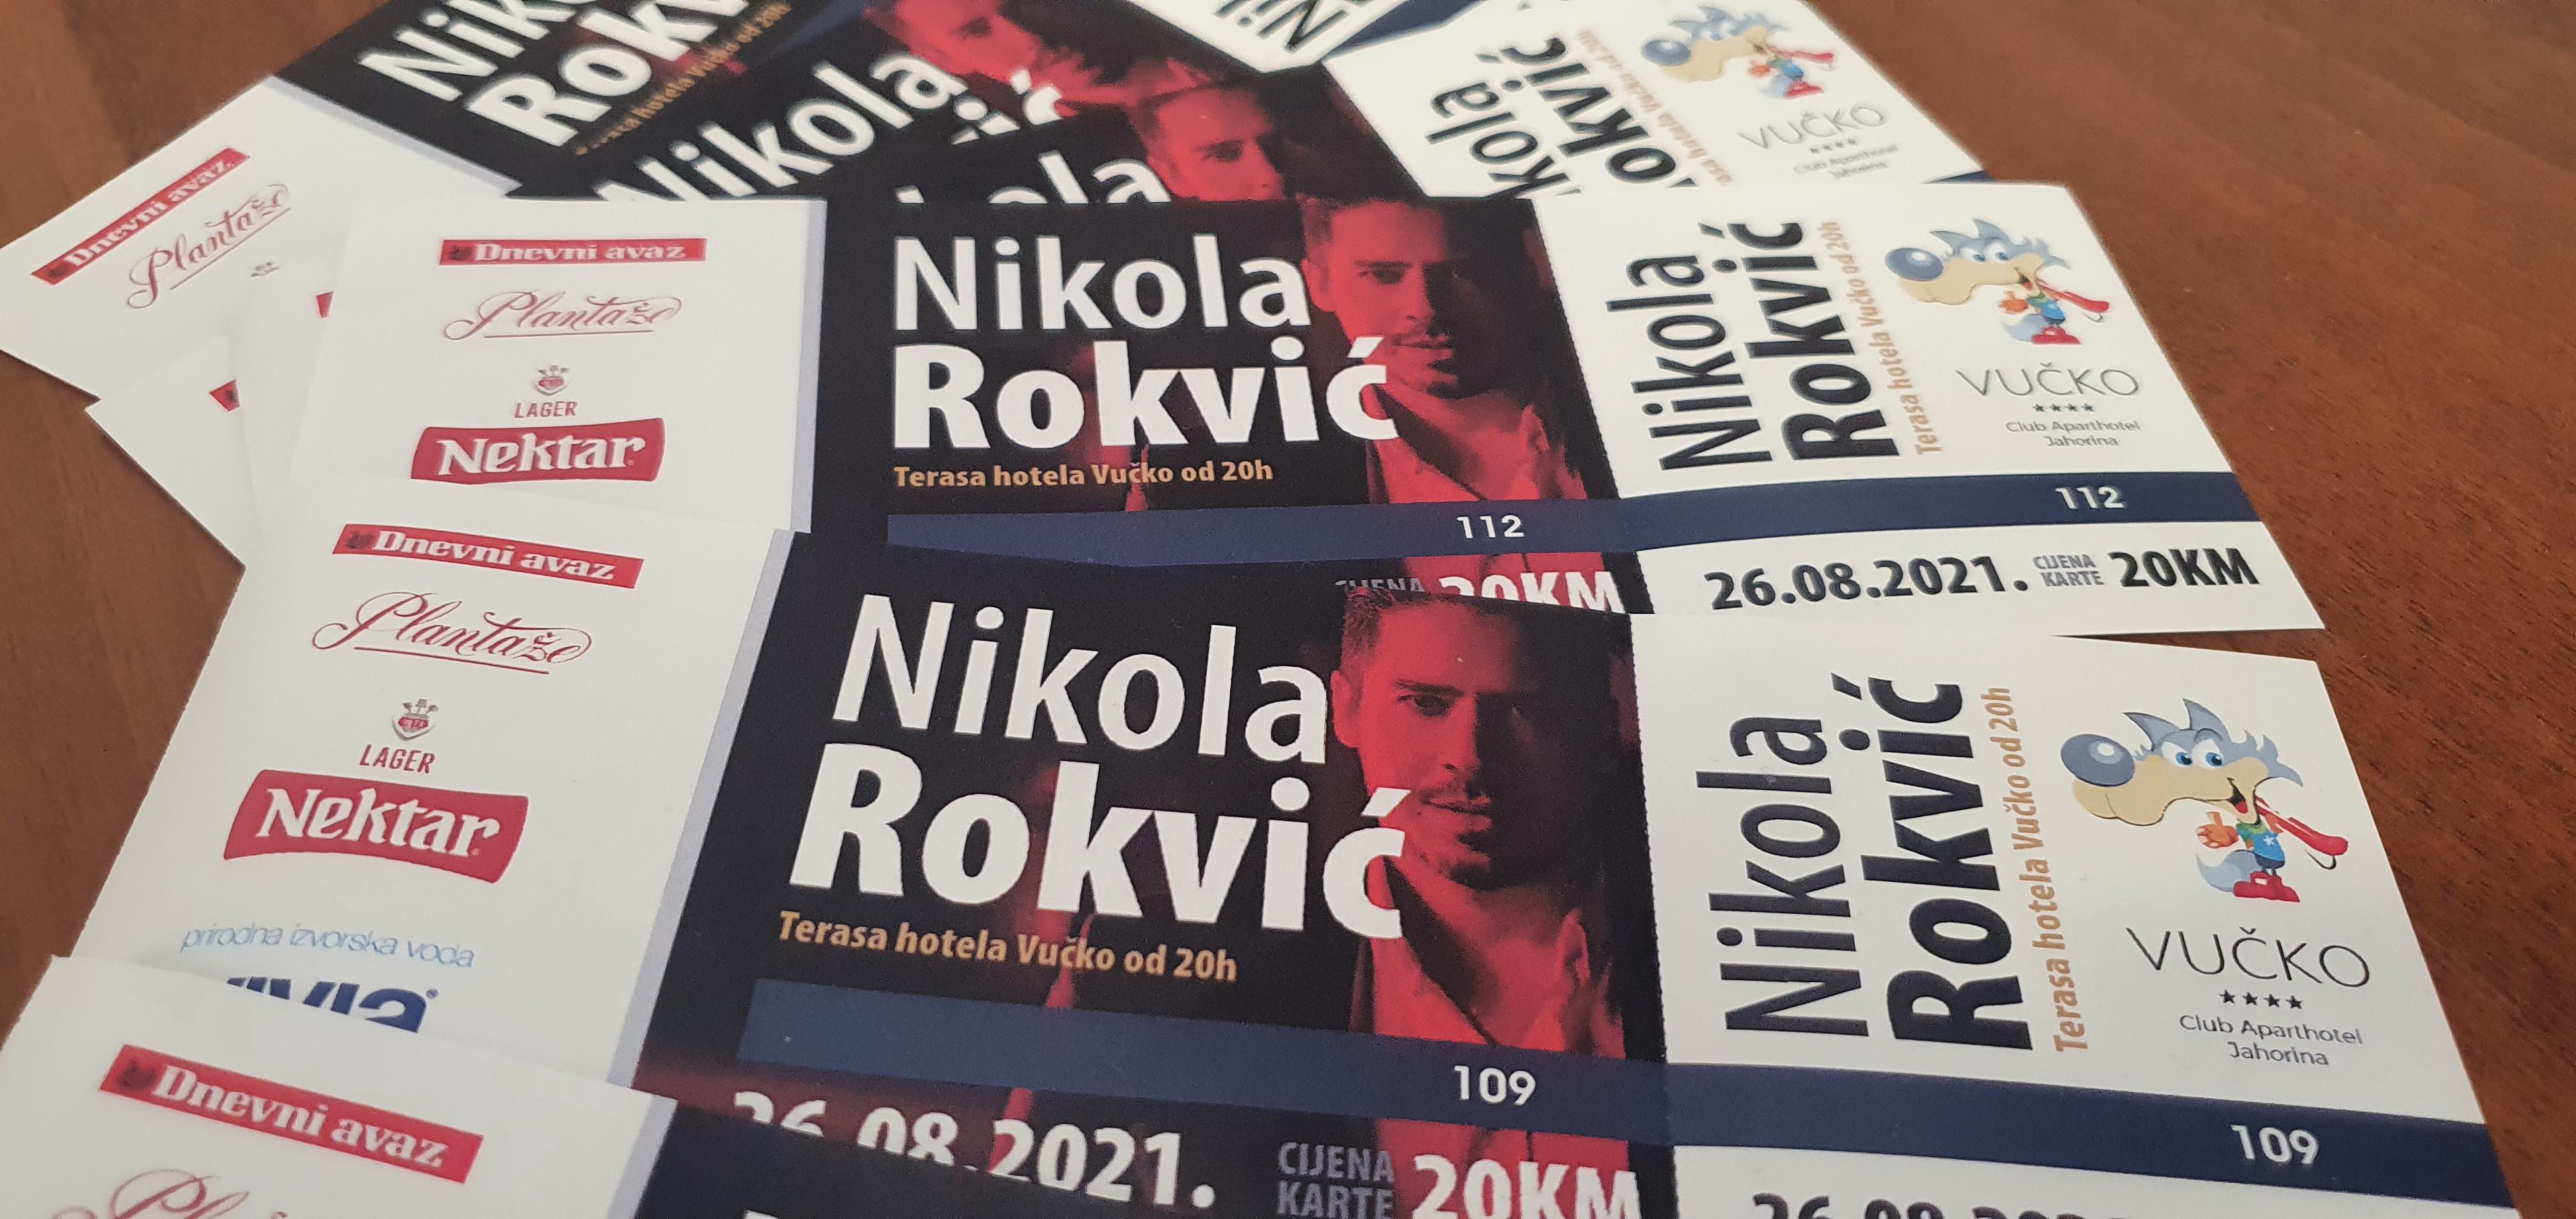 "Dnevni avaz" poklanja ulaznice za koncert Nikole Rokvića